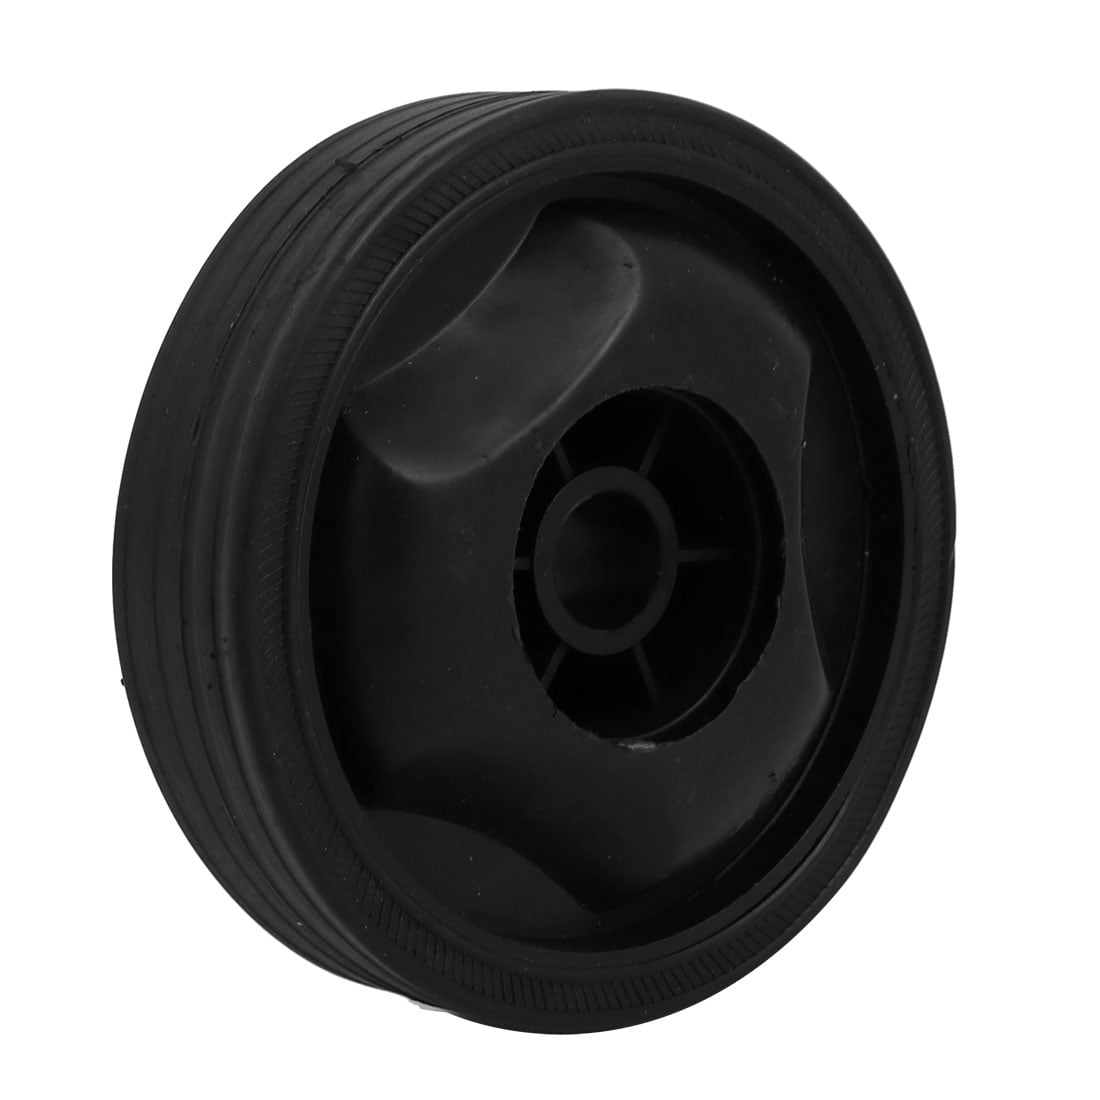 Details about   4 1/2" Dia Plastic Wheel Repairing Part Black for Air Compressor 